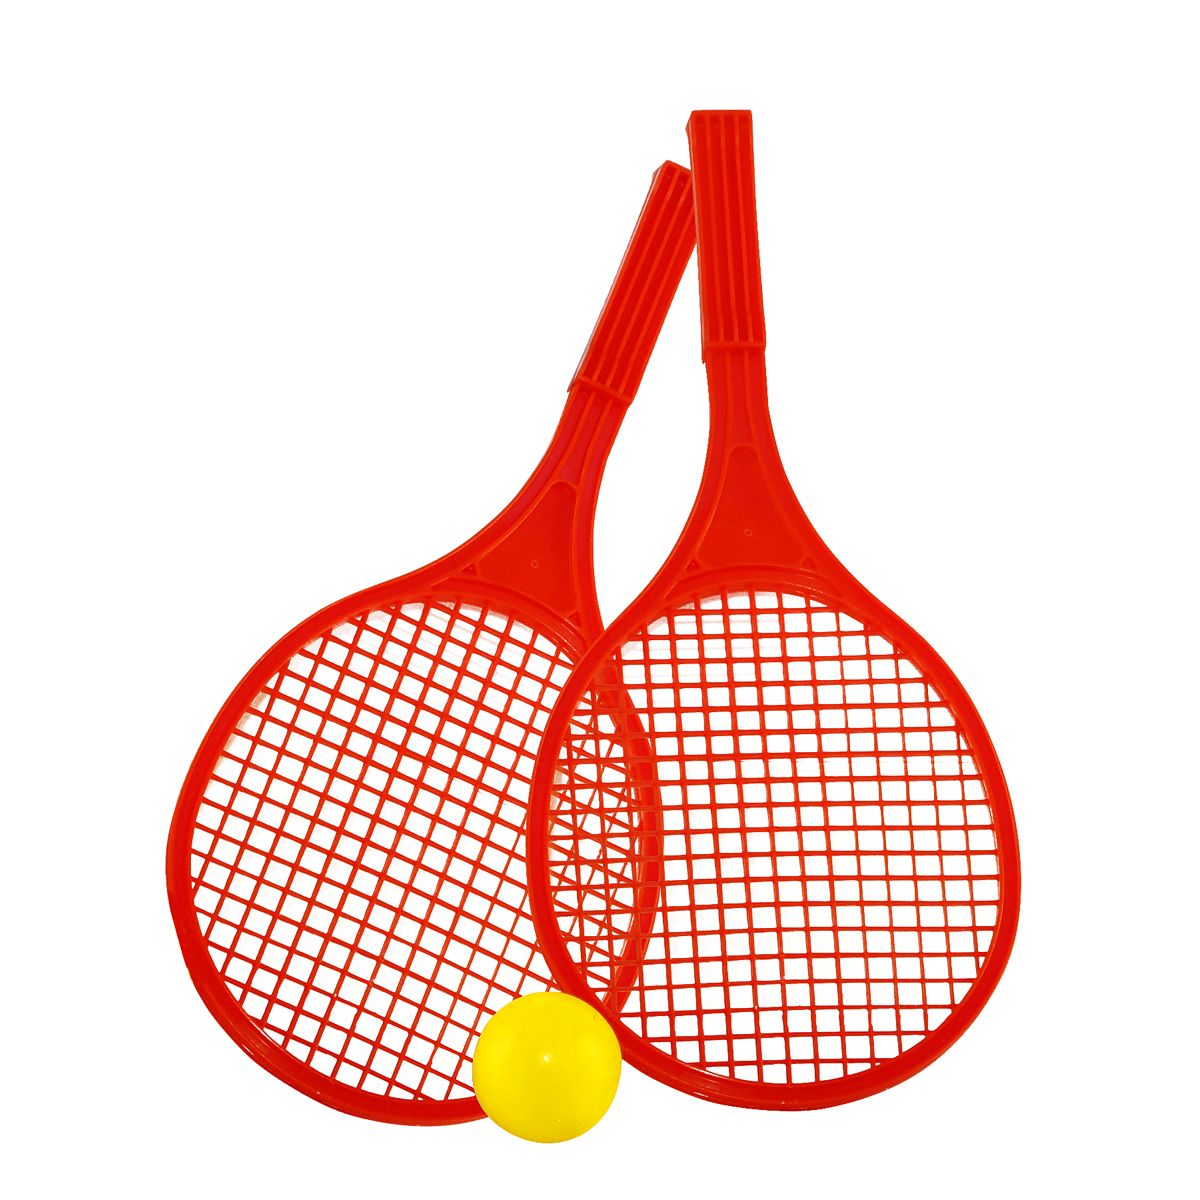 Rakieta do badmintona plażowa średnia Bączek/Tupiko (RS 8621)